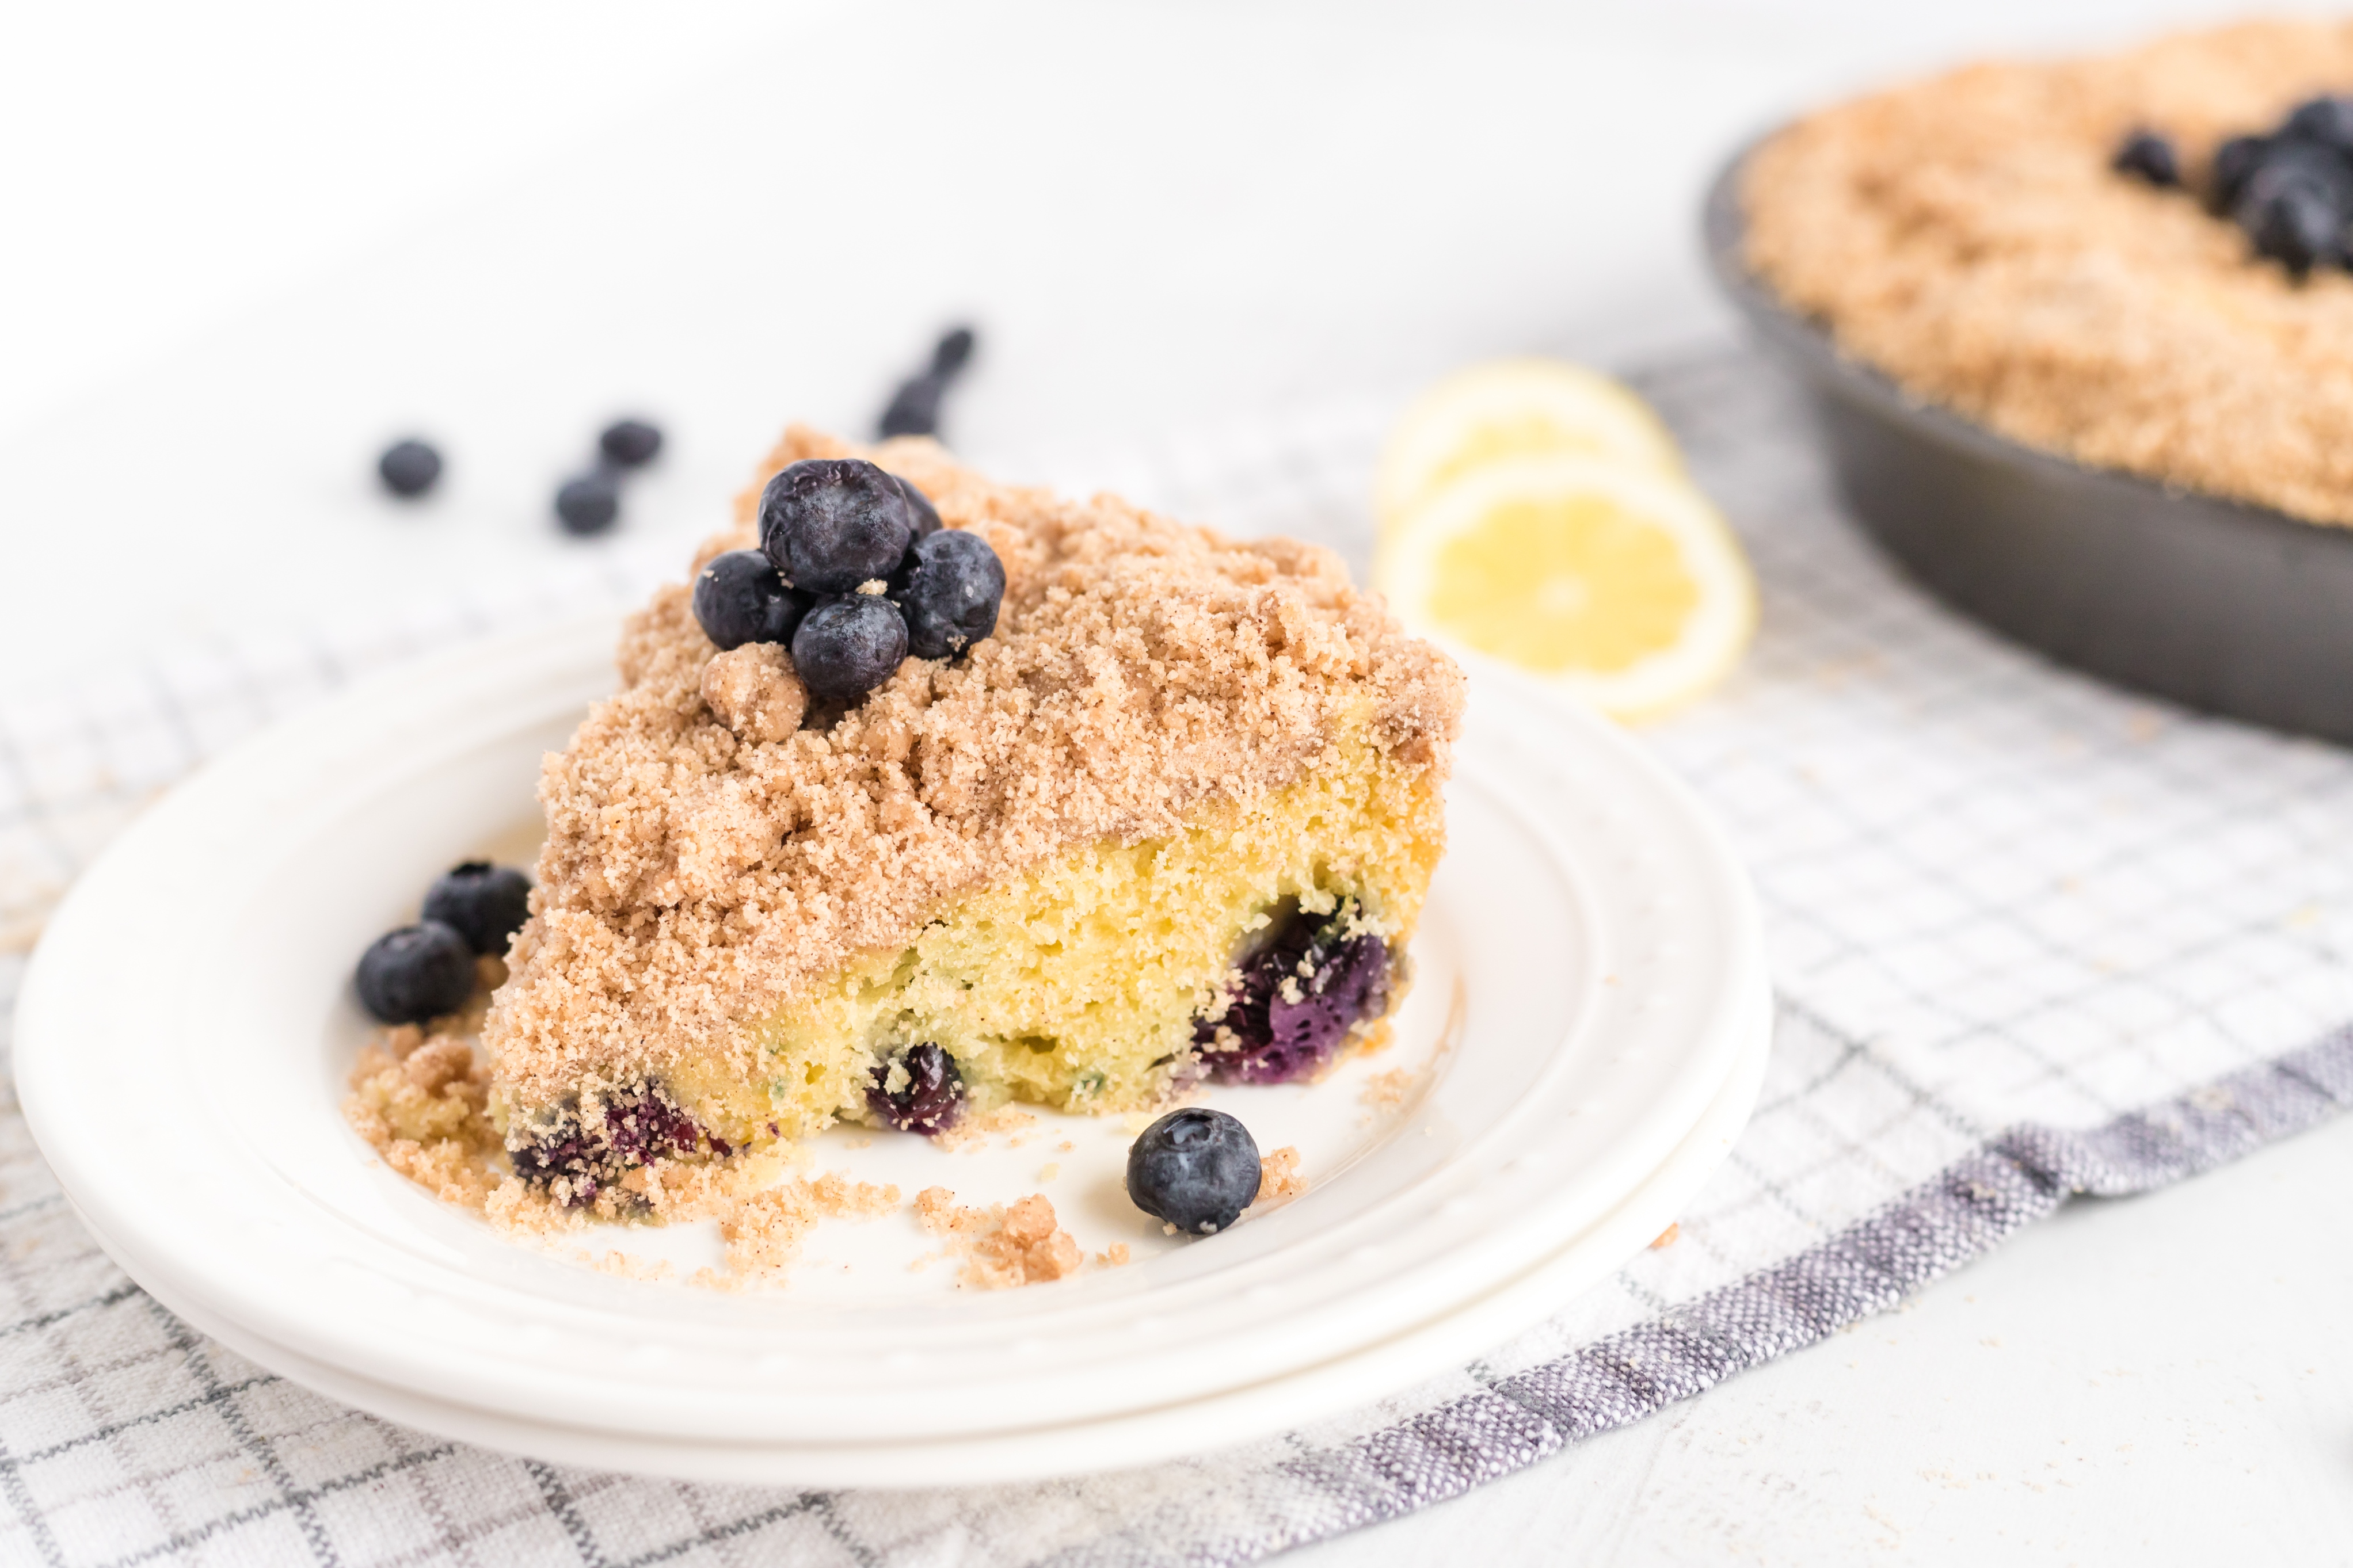 Ina Garten's Blueberry Crumb Coffee Cake